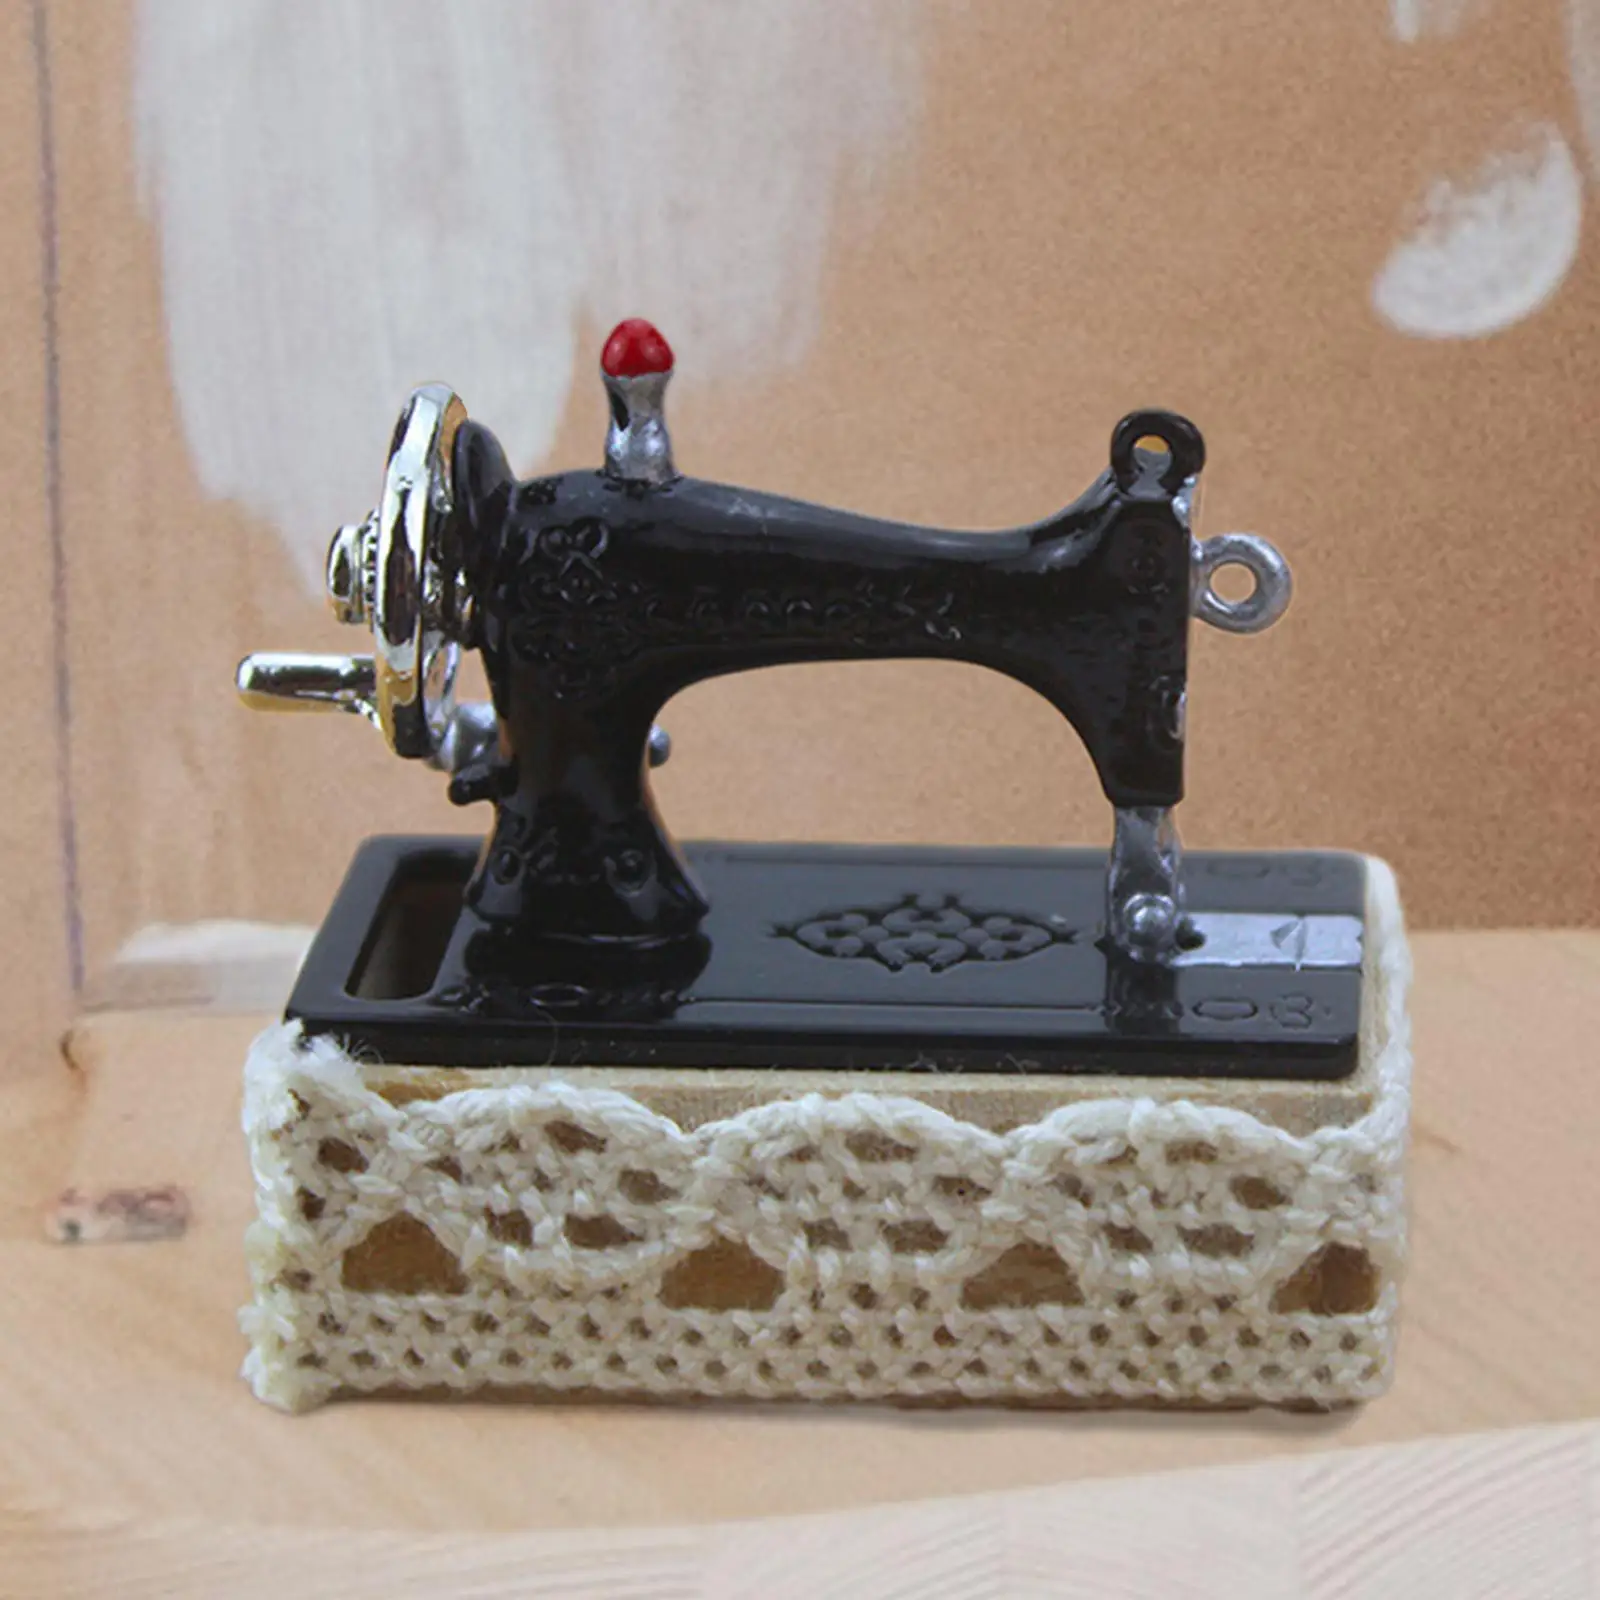 1:12 Dollhouse Miniature Sewing Machine DIY Scene Model for Room Decoration